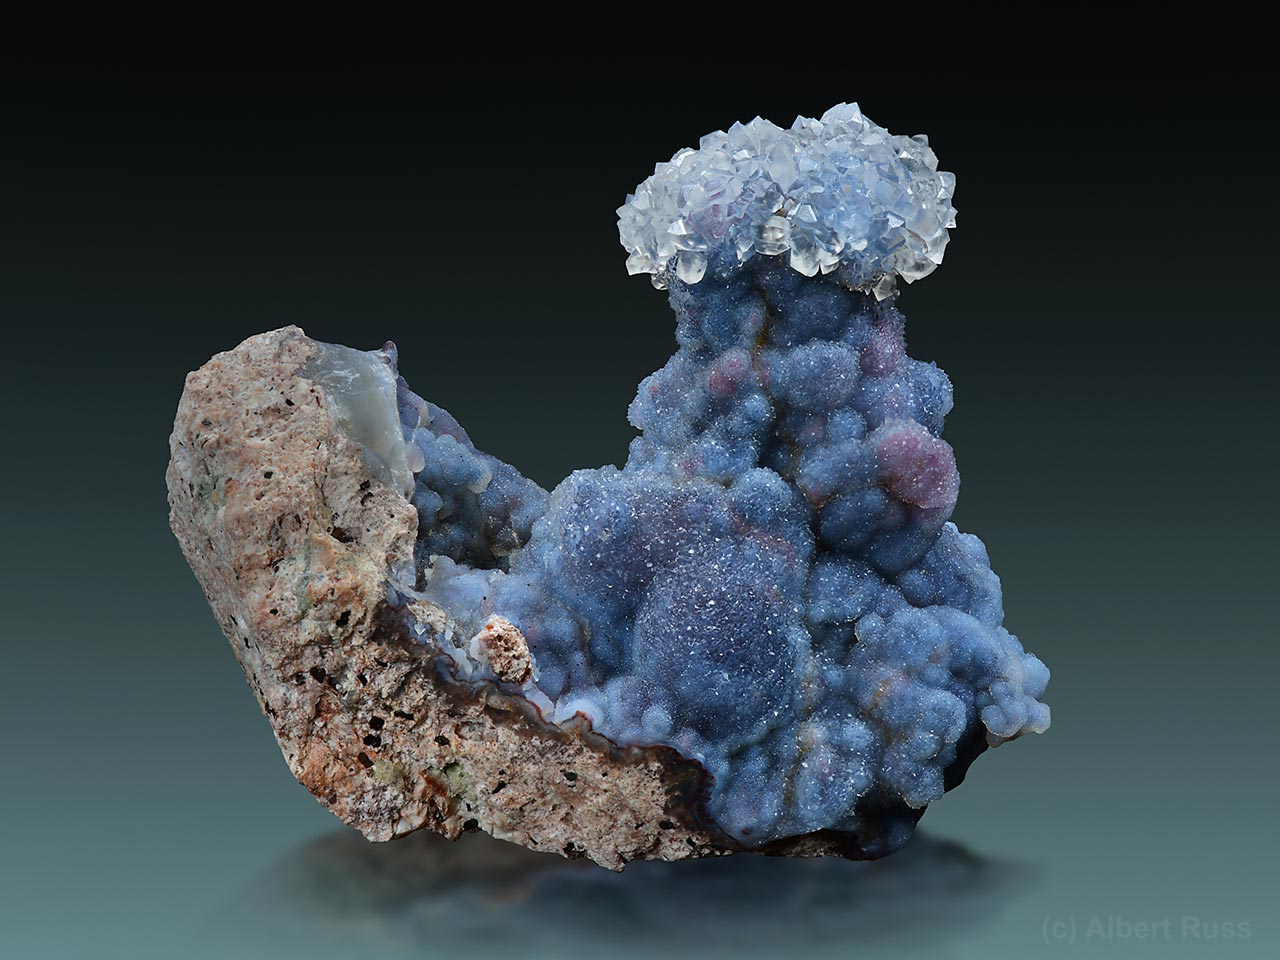 Clear quartz crystals growing on blue chalcedony from Hliník nad Hronom, Slovakia